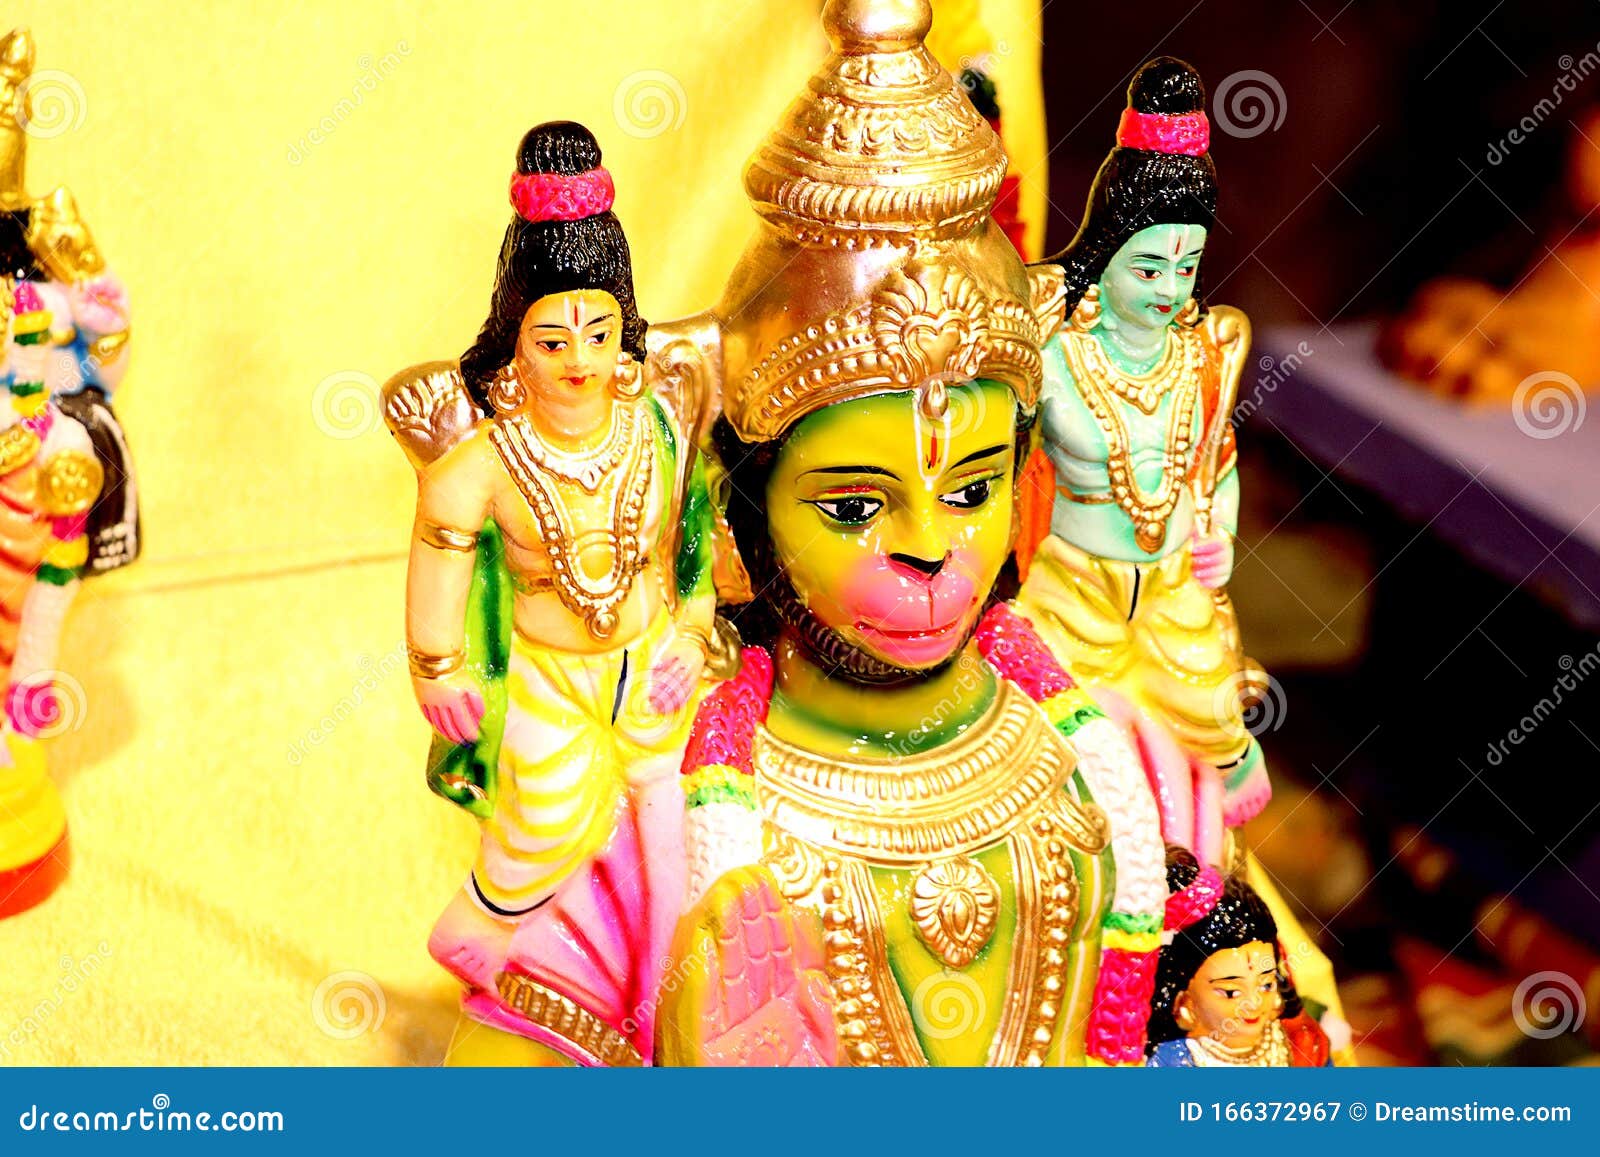 Idol of Lord Anjaneya or Hanuman Stock Image - Image of shoulders ...